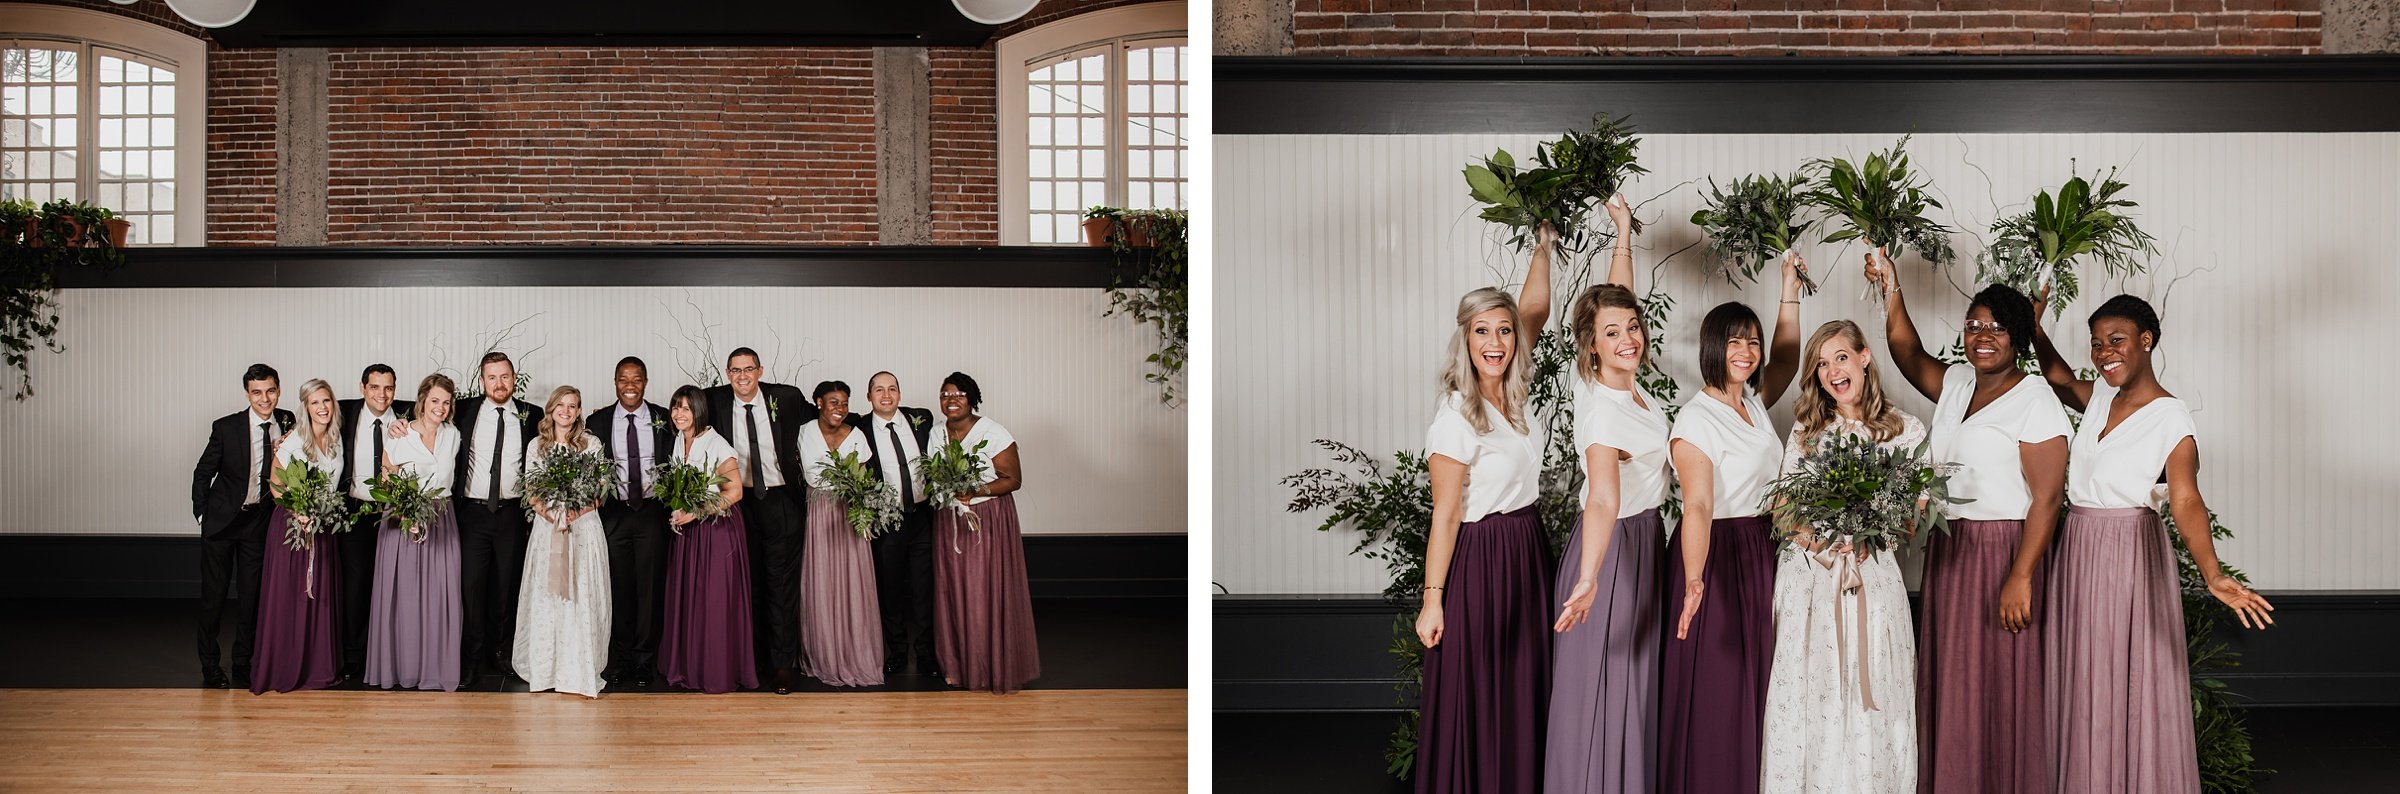 The Evergreen Best Portland Oregon Wedding Venues 052